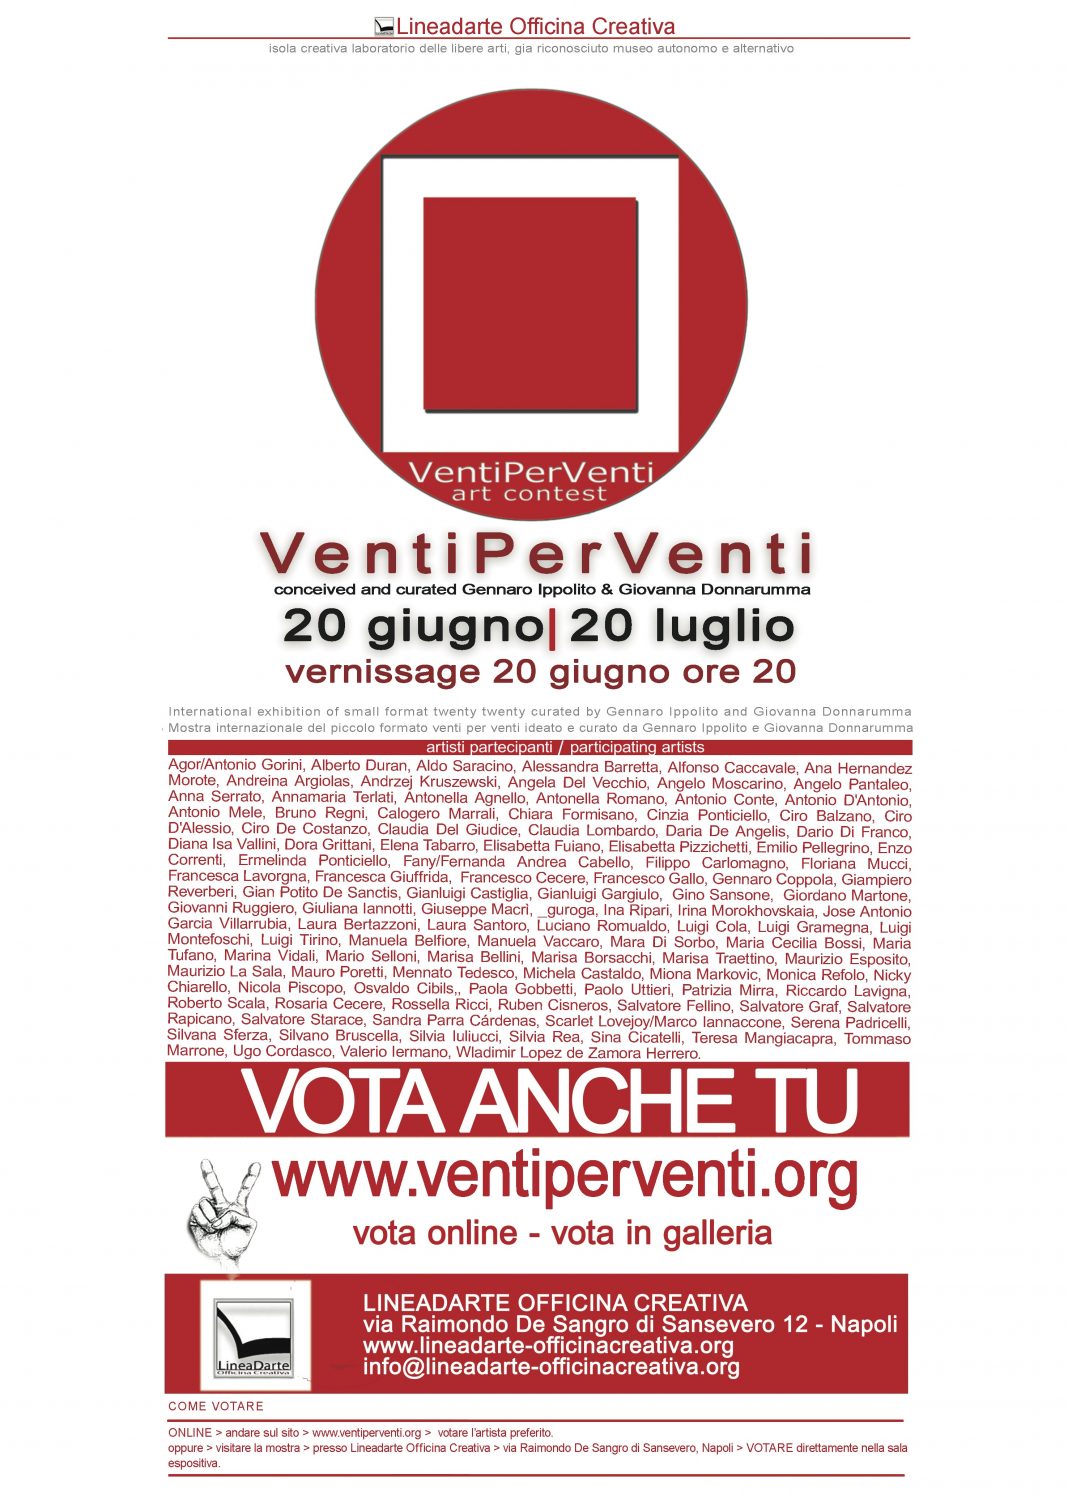 VentiPerVenti art-contesthttps://www.exibart.com/repository/media/eventi/2013/06/ventiperventi-art-contest-1068x1495.jpg